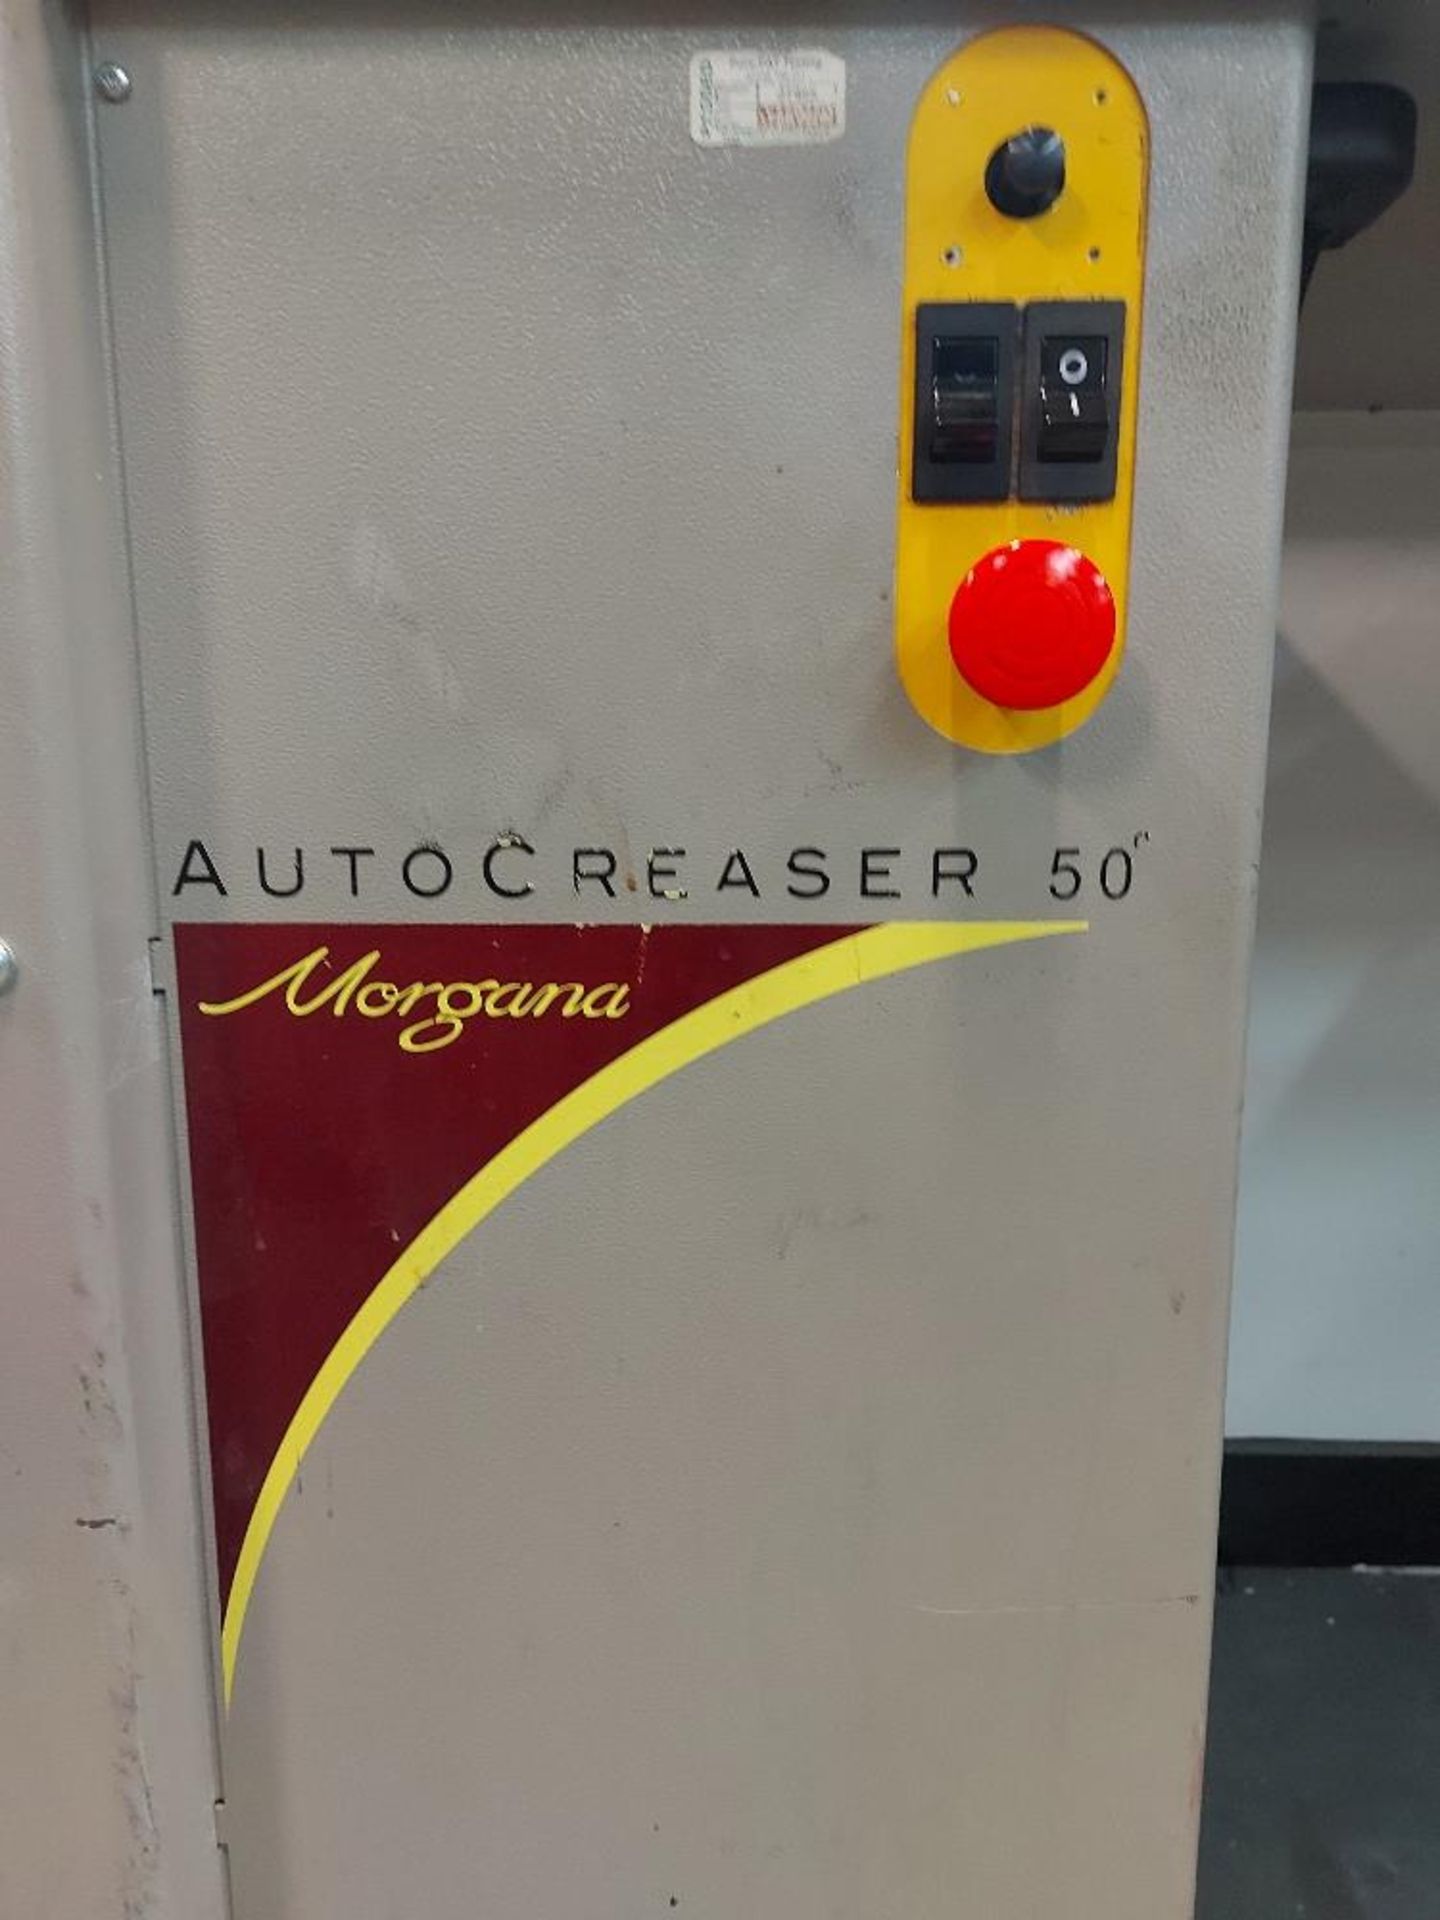 Morgana Auto creaser 50-Y10820 Automatic Card Creasing Machine - Image 3 of 3